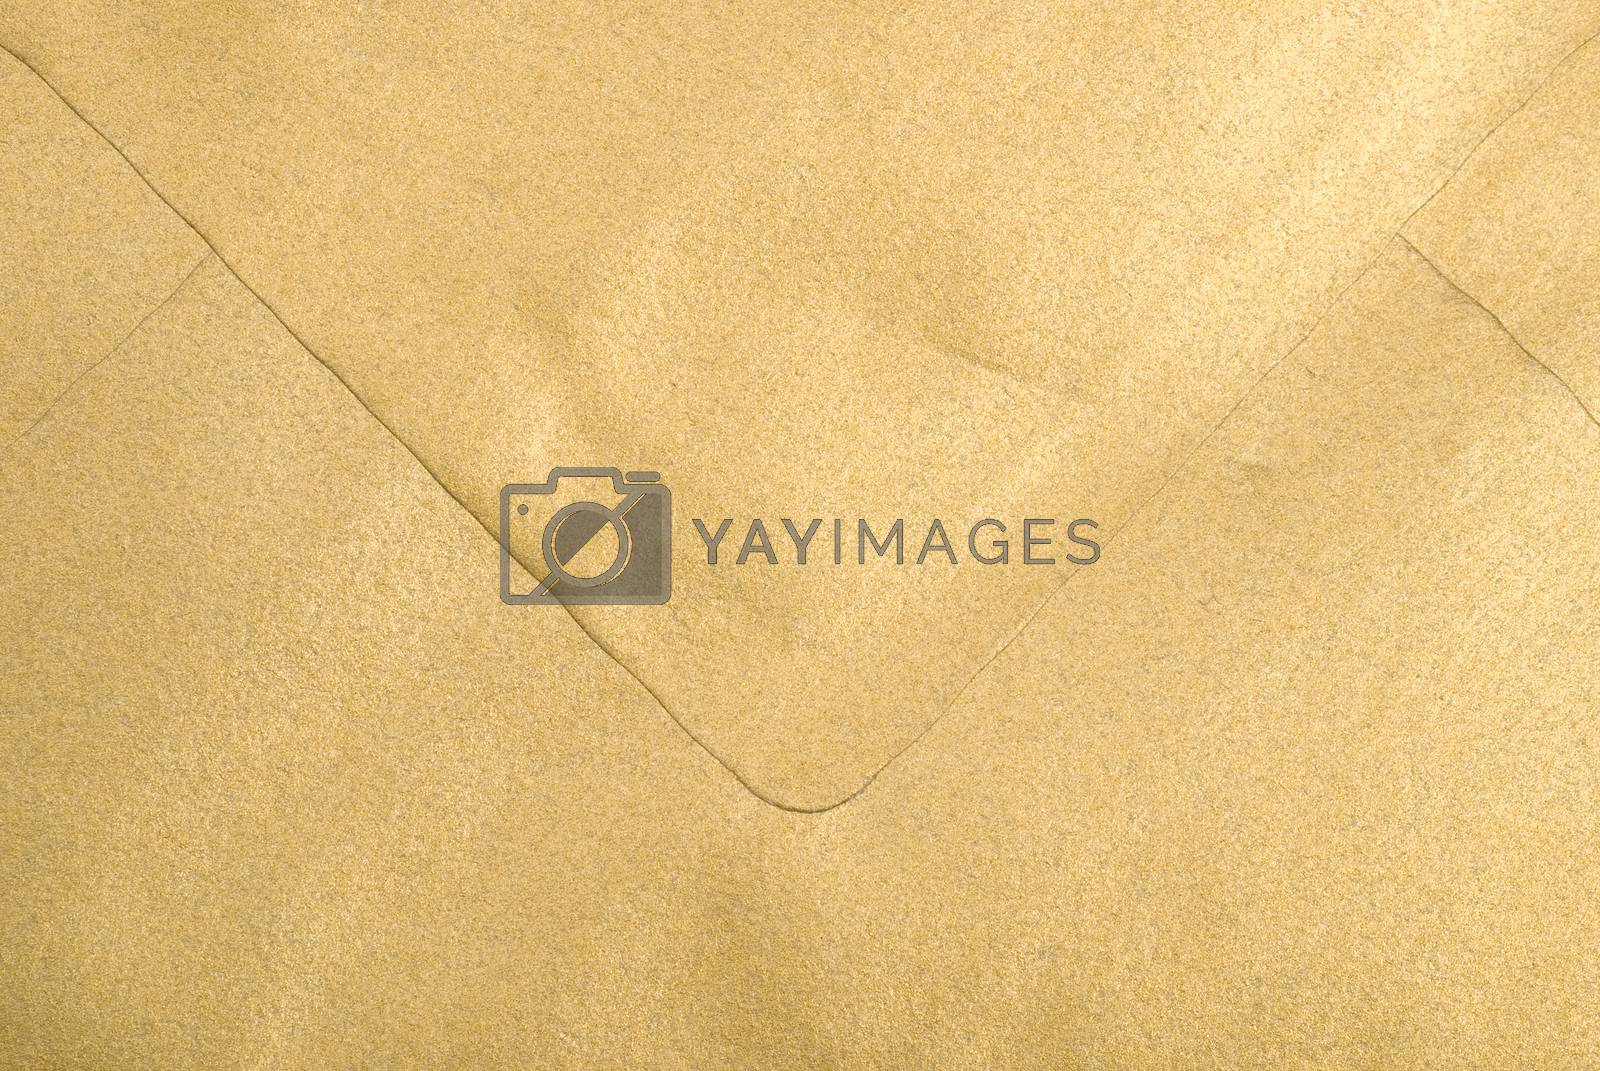 Royalty free image of Envelope by ockra